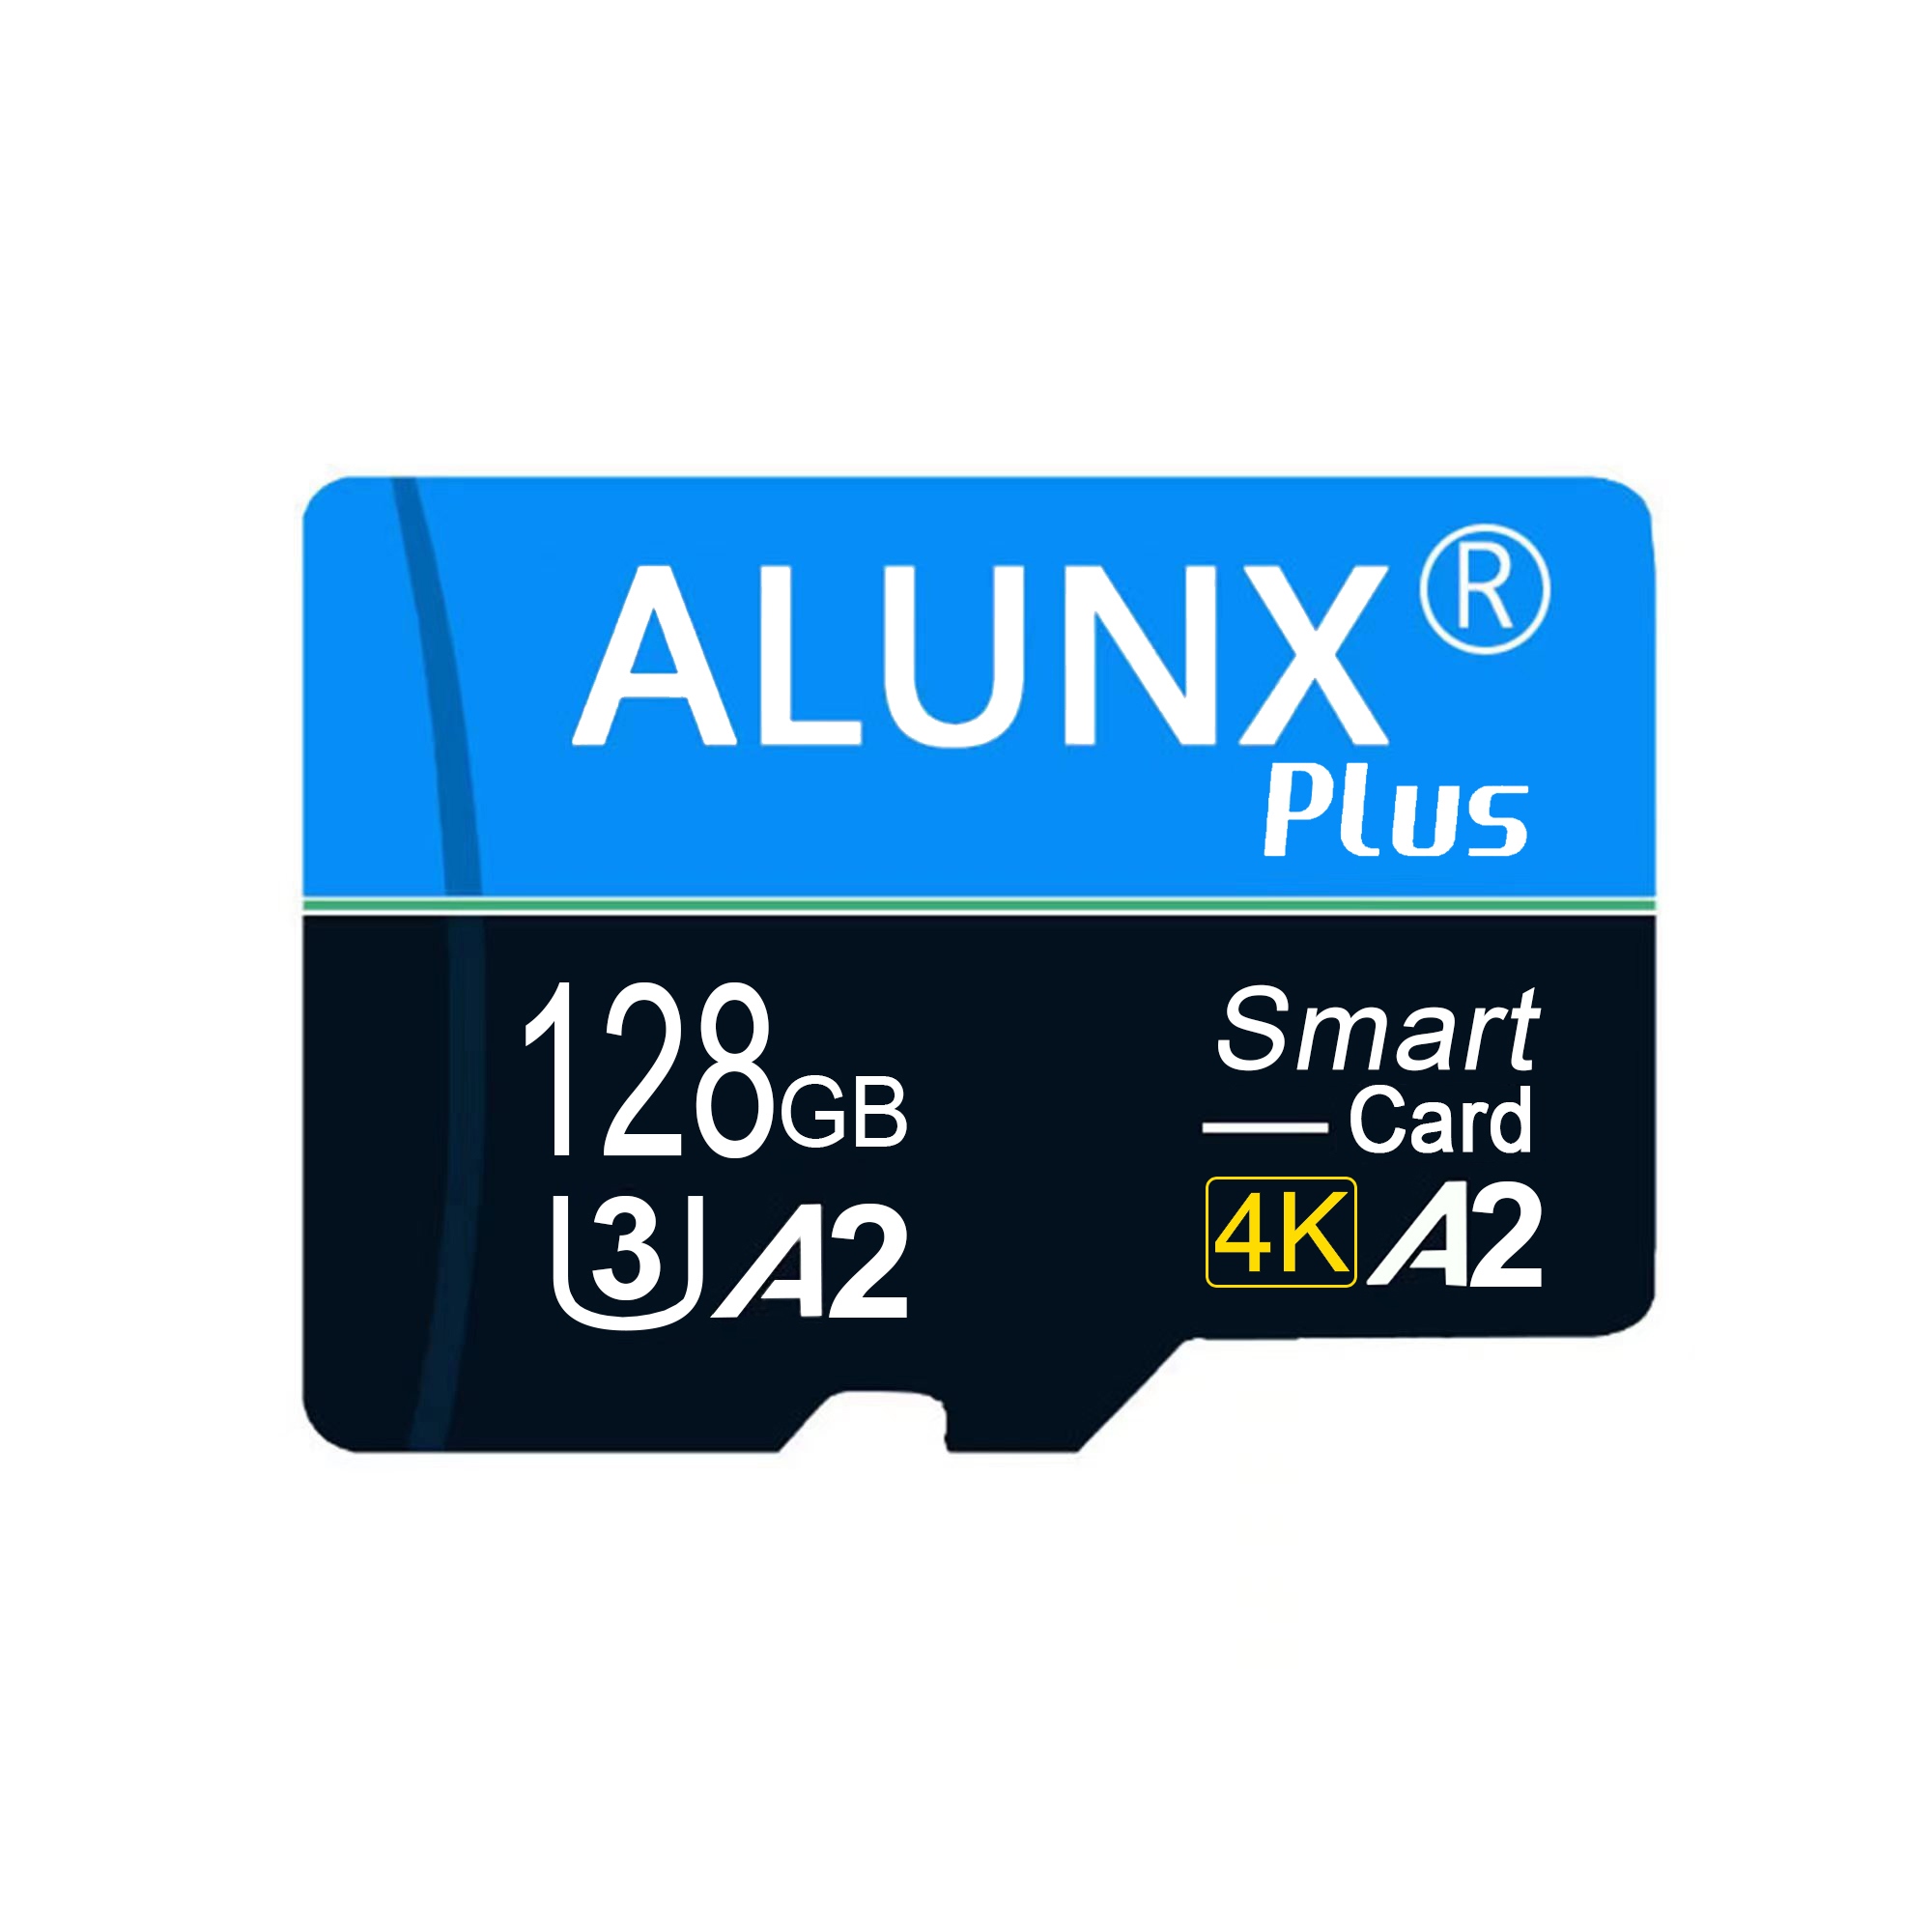 CW ALUNX 100 Micro SD Card 256G 128GB 64GB 32GB Flash Class 10 Support